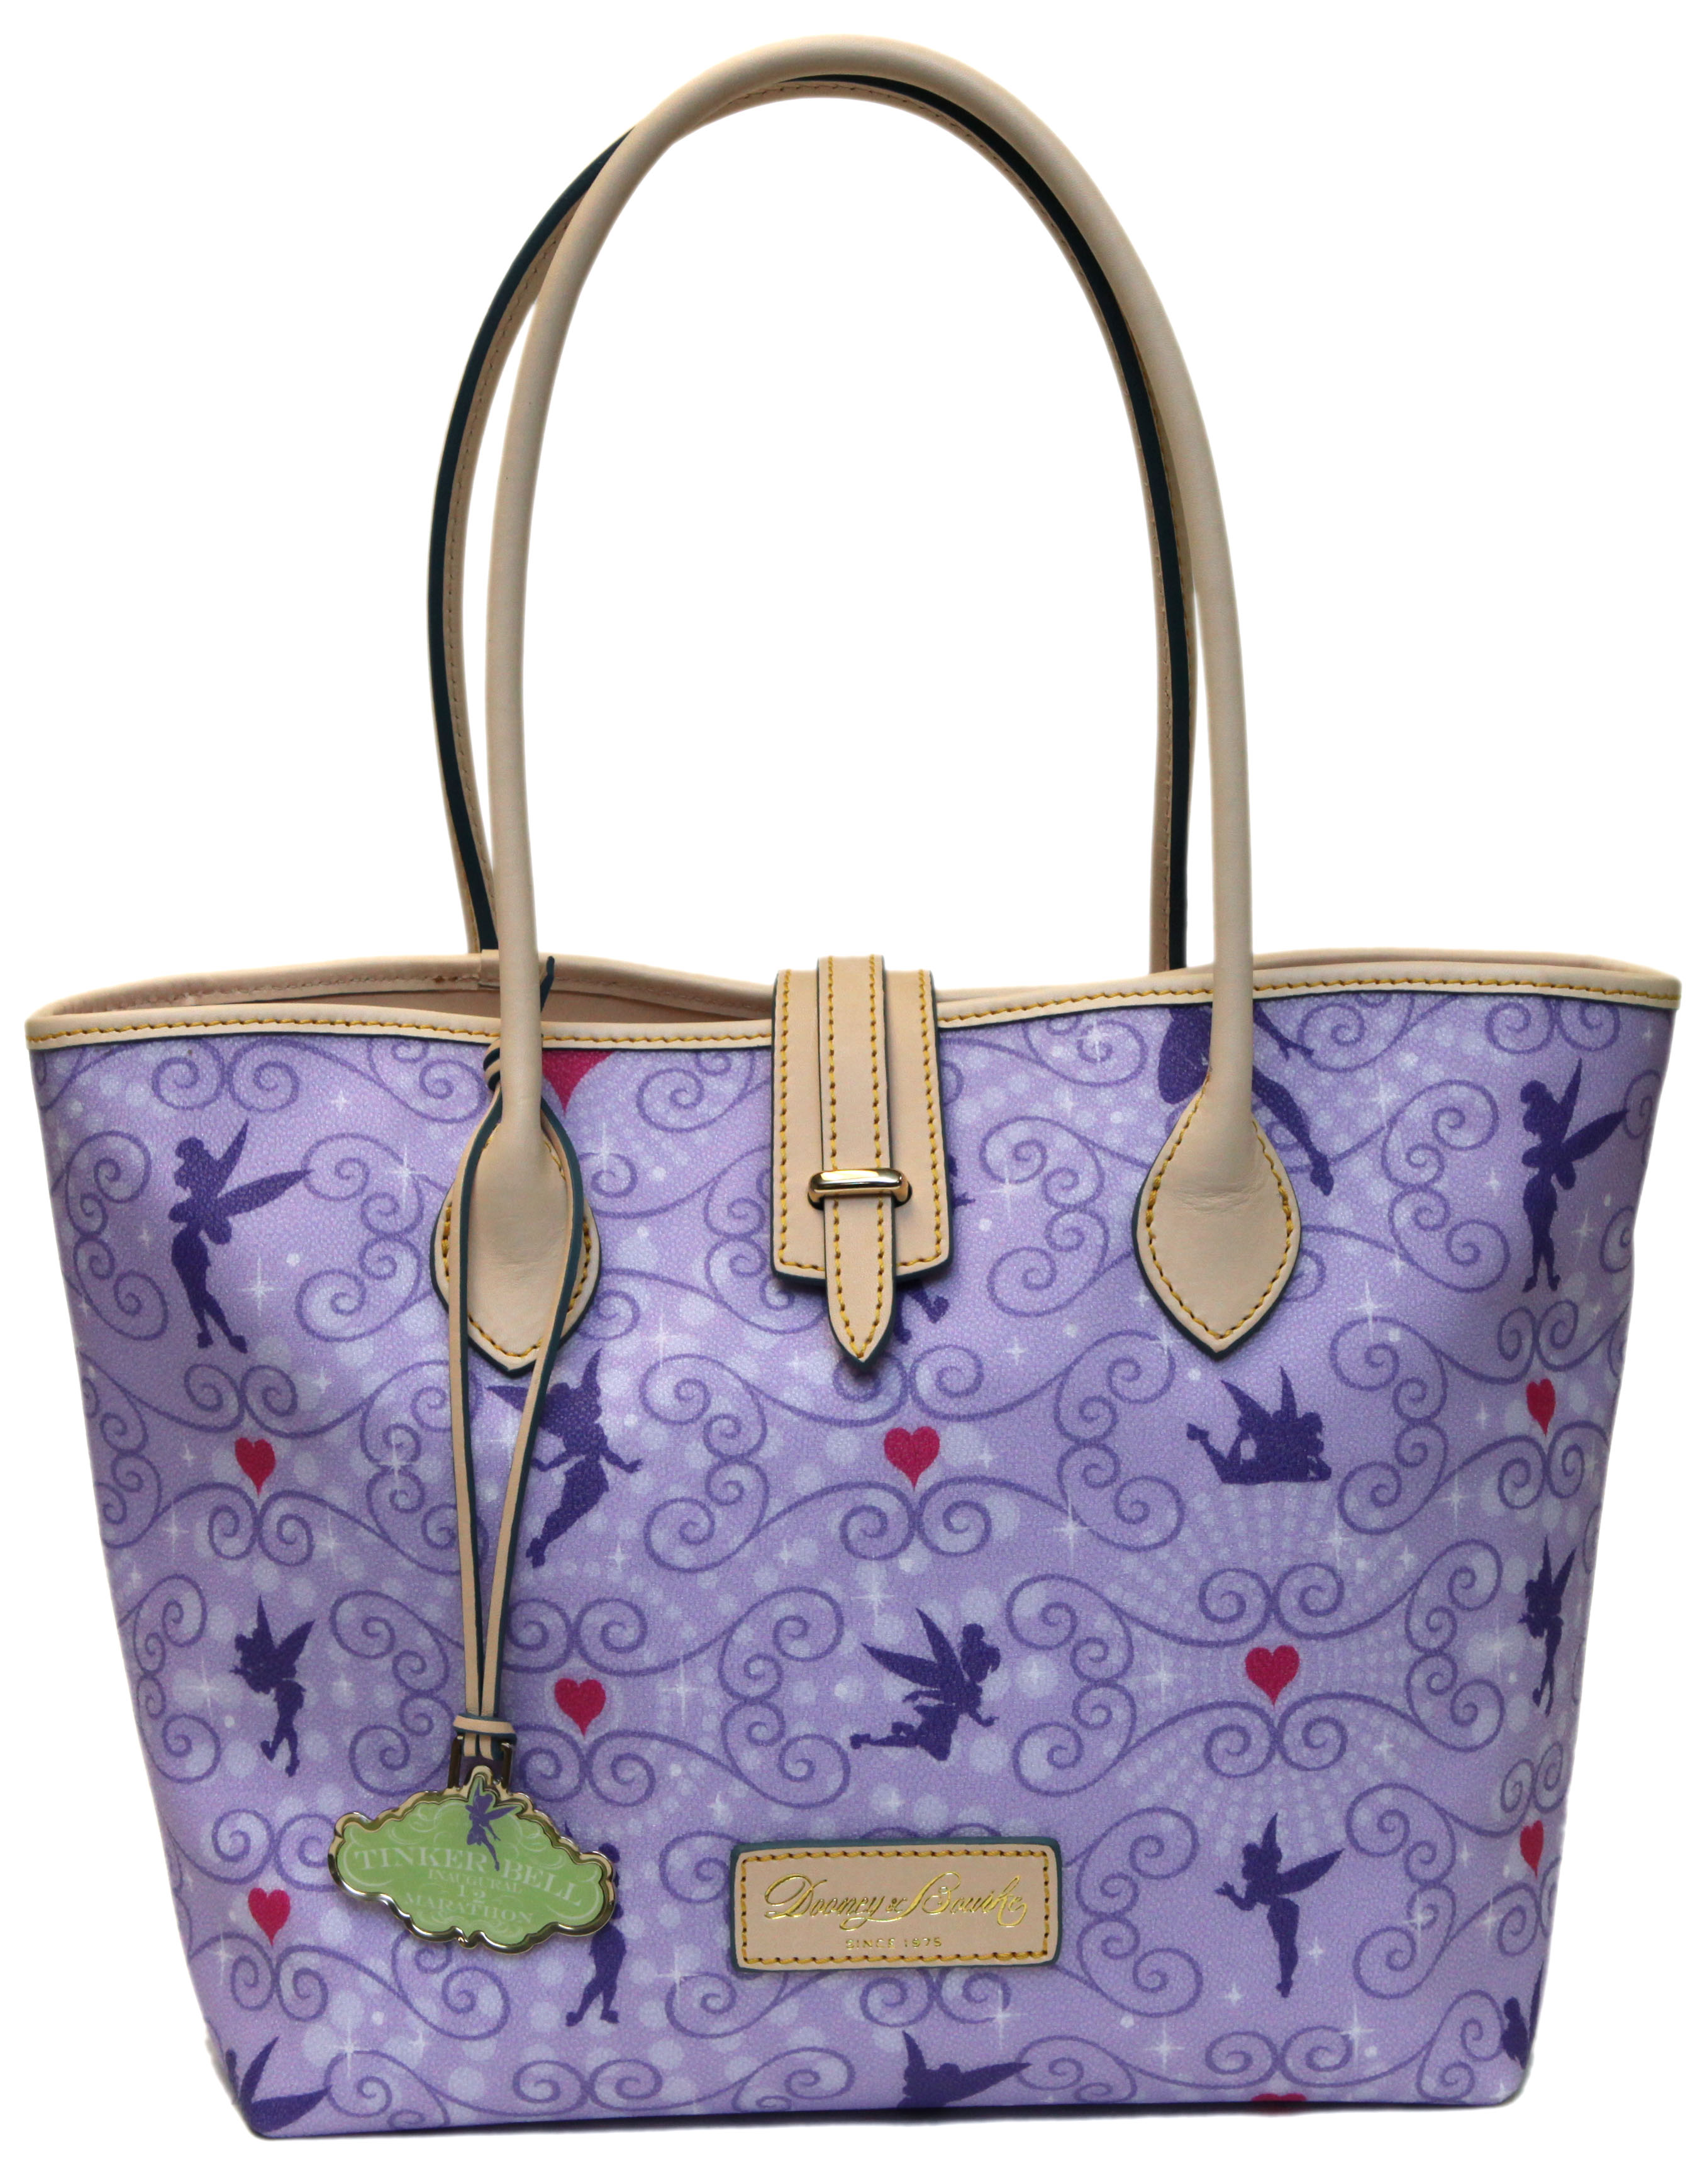 Tinker Bell Disney Dooney & Bourke Bags to Debut at